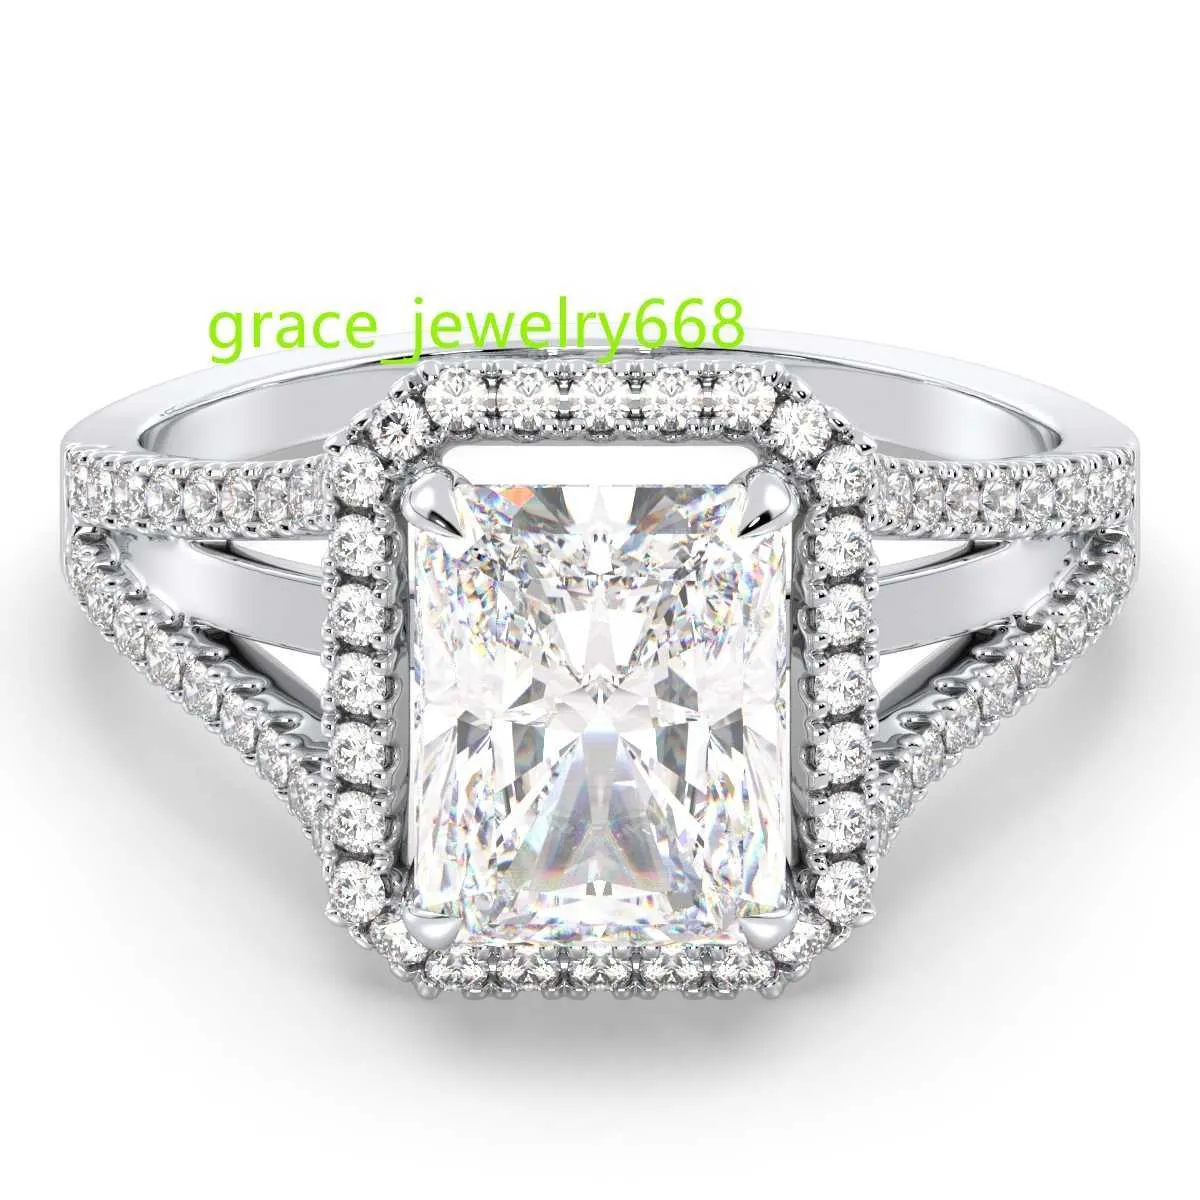 REYES Hot Sell Wedding Fashion Jewelry 925 Sterling Silver 3 gram Moissanite Rings 14K Gold Engagement Promise Rings For Women